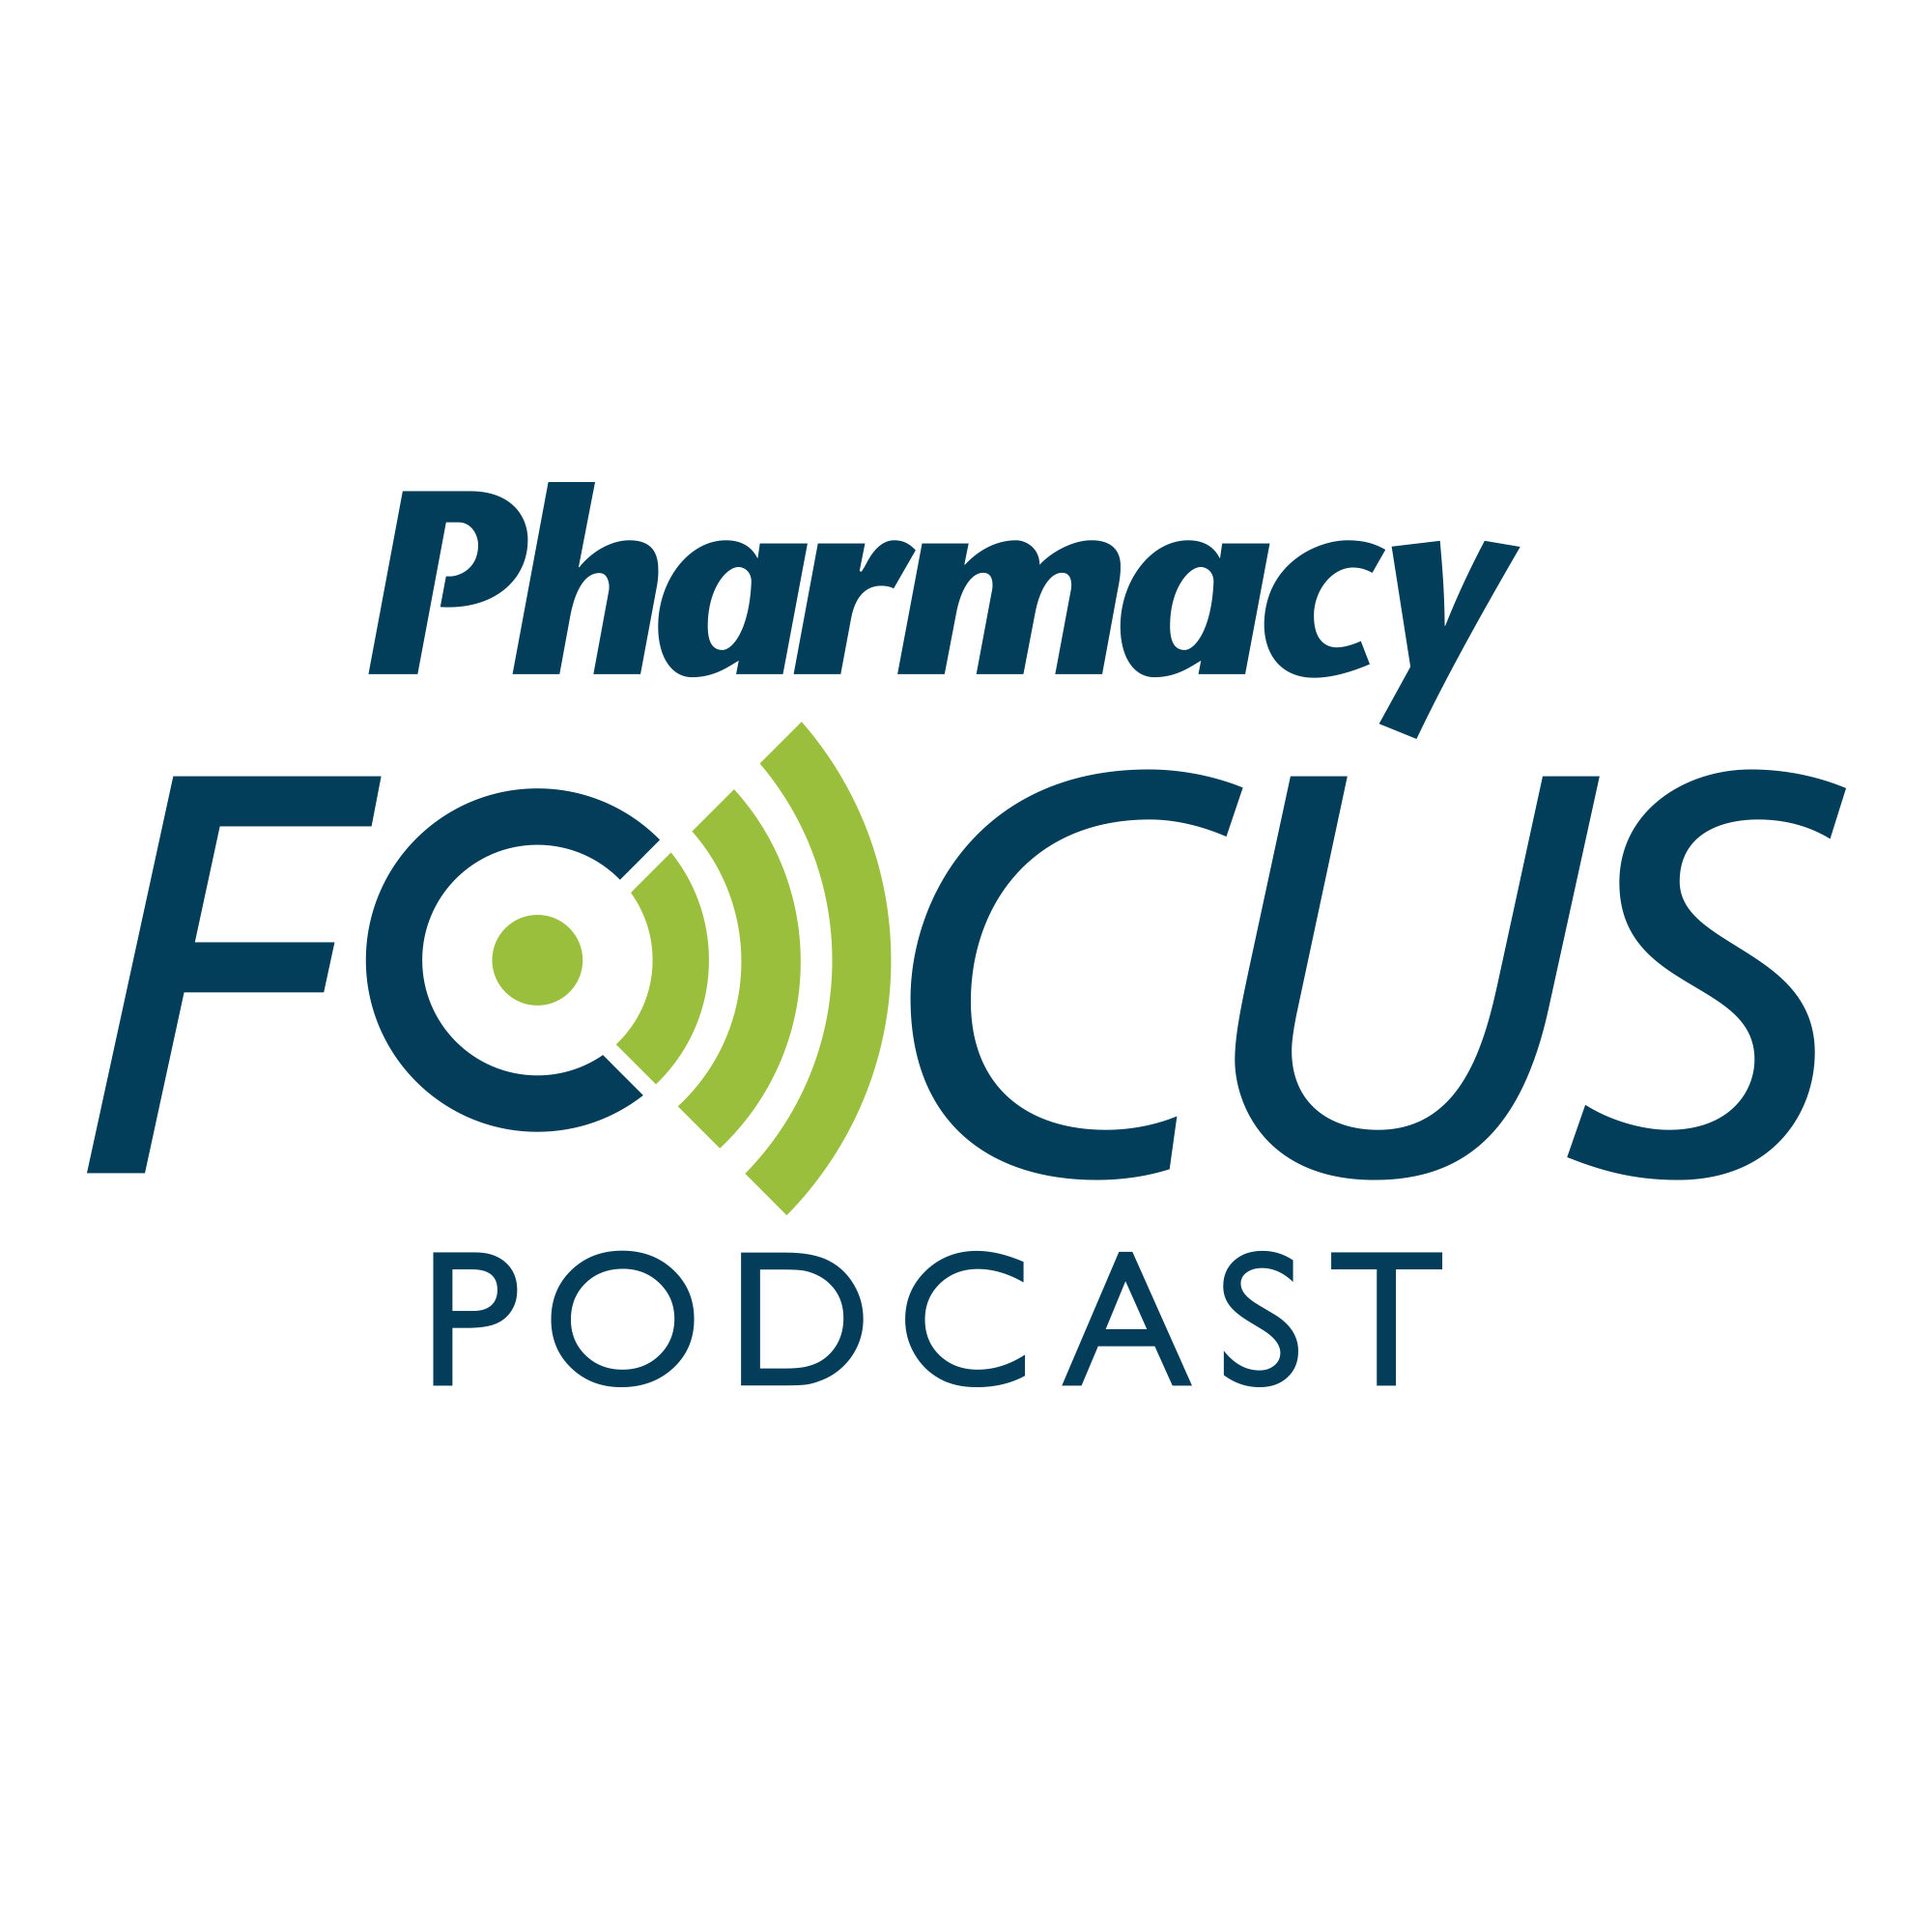 Pharmacy Focus Episode 1: Good Neighbor Pharmacy and COVID-19